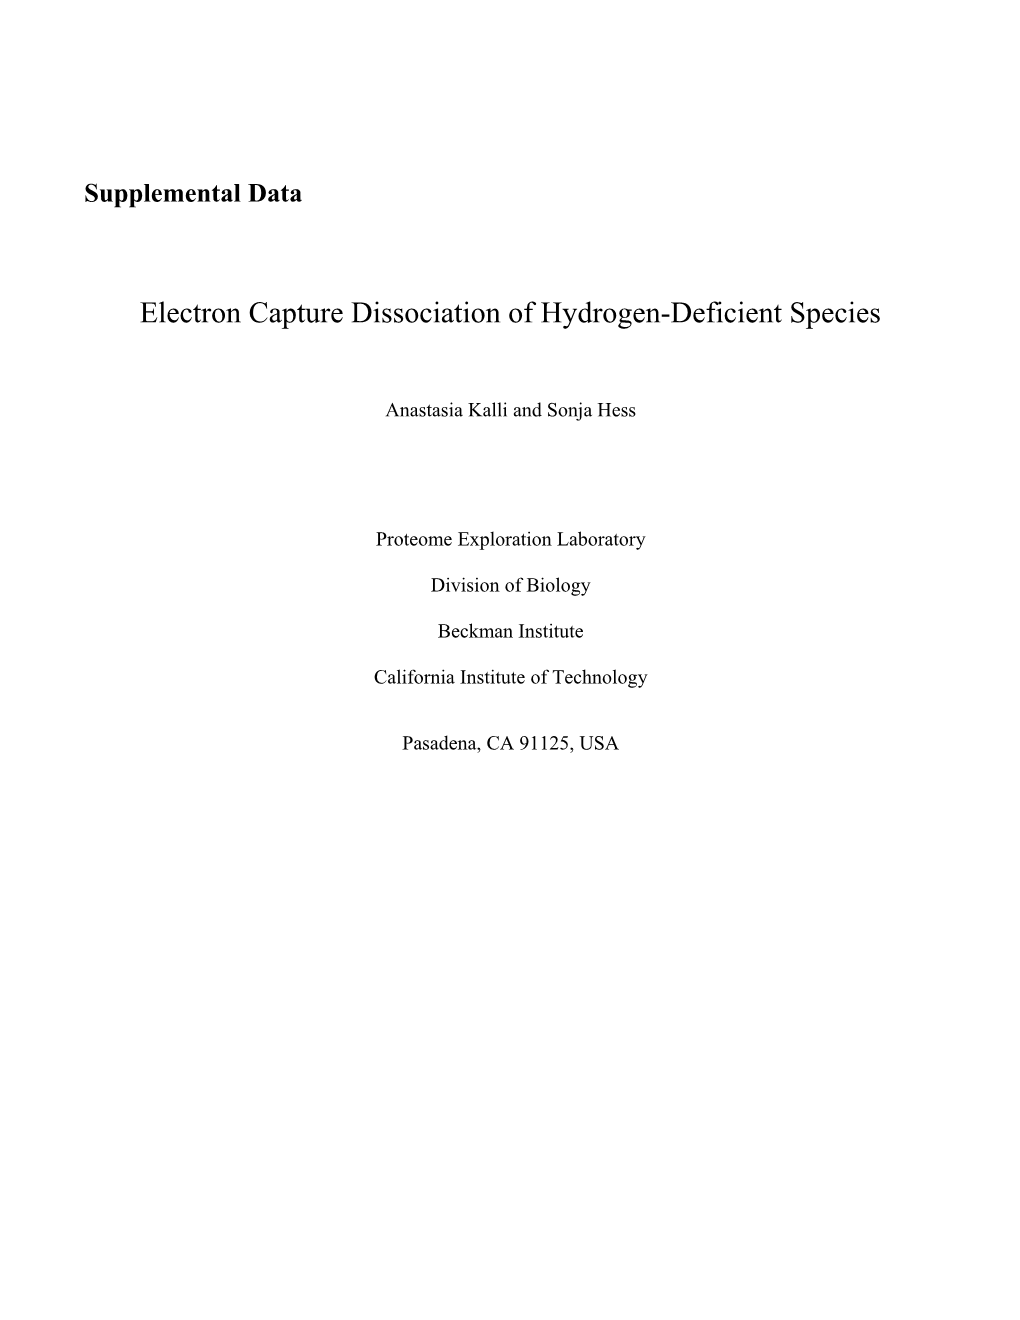 Electron Capture Dissociation of Hydrogen-Deficient Species